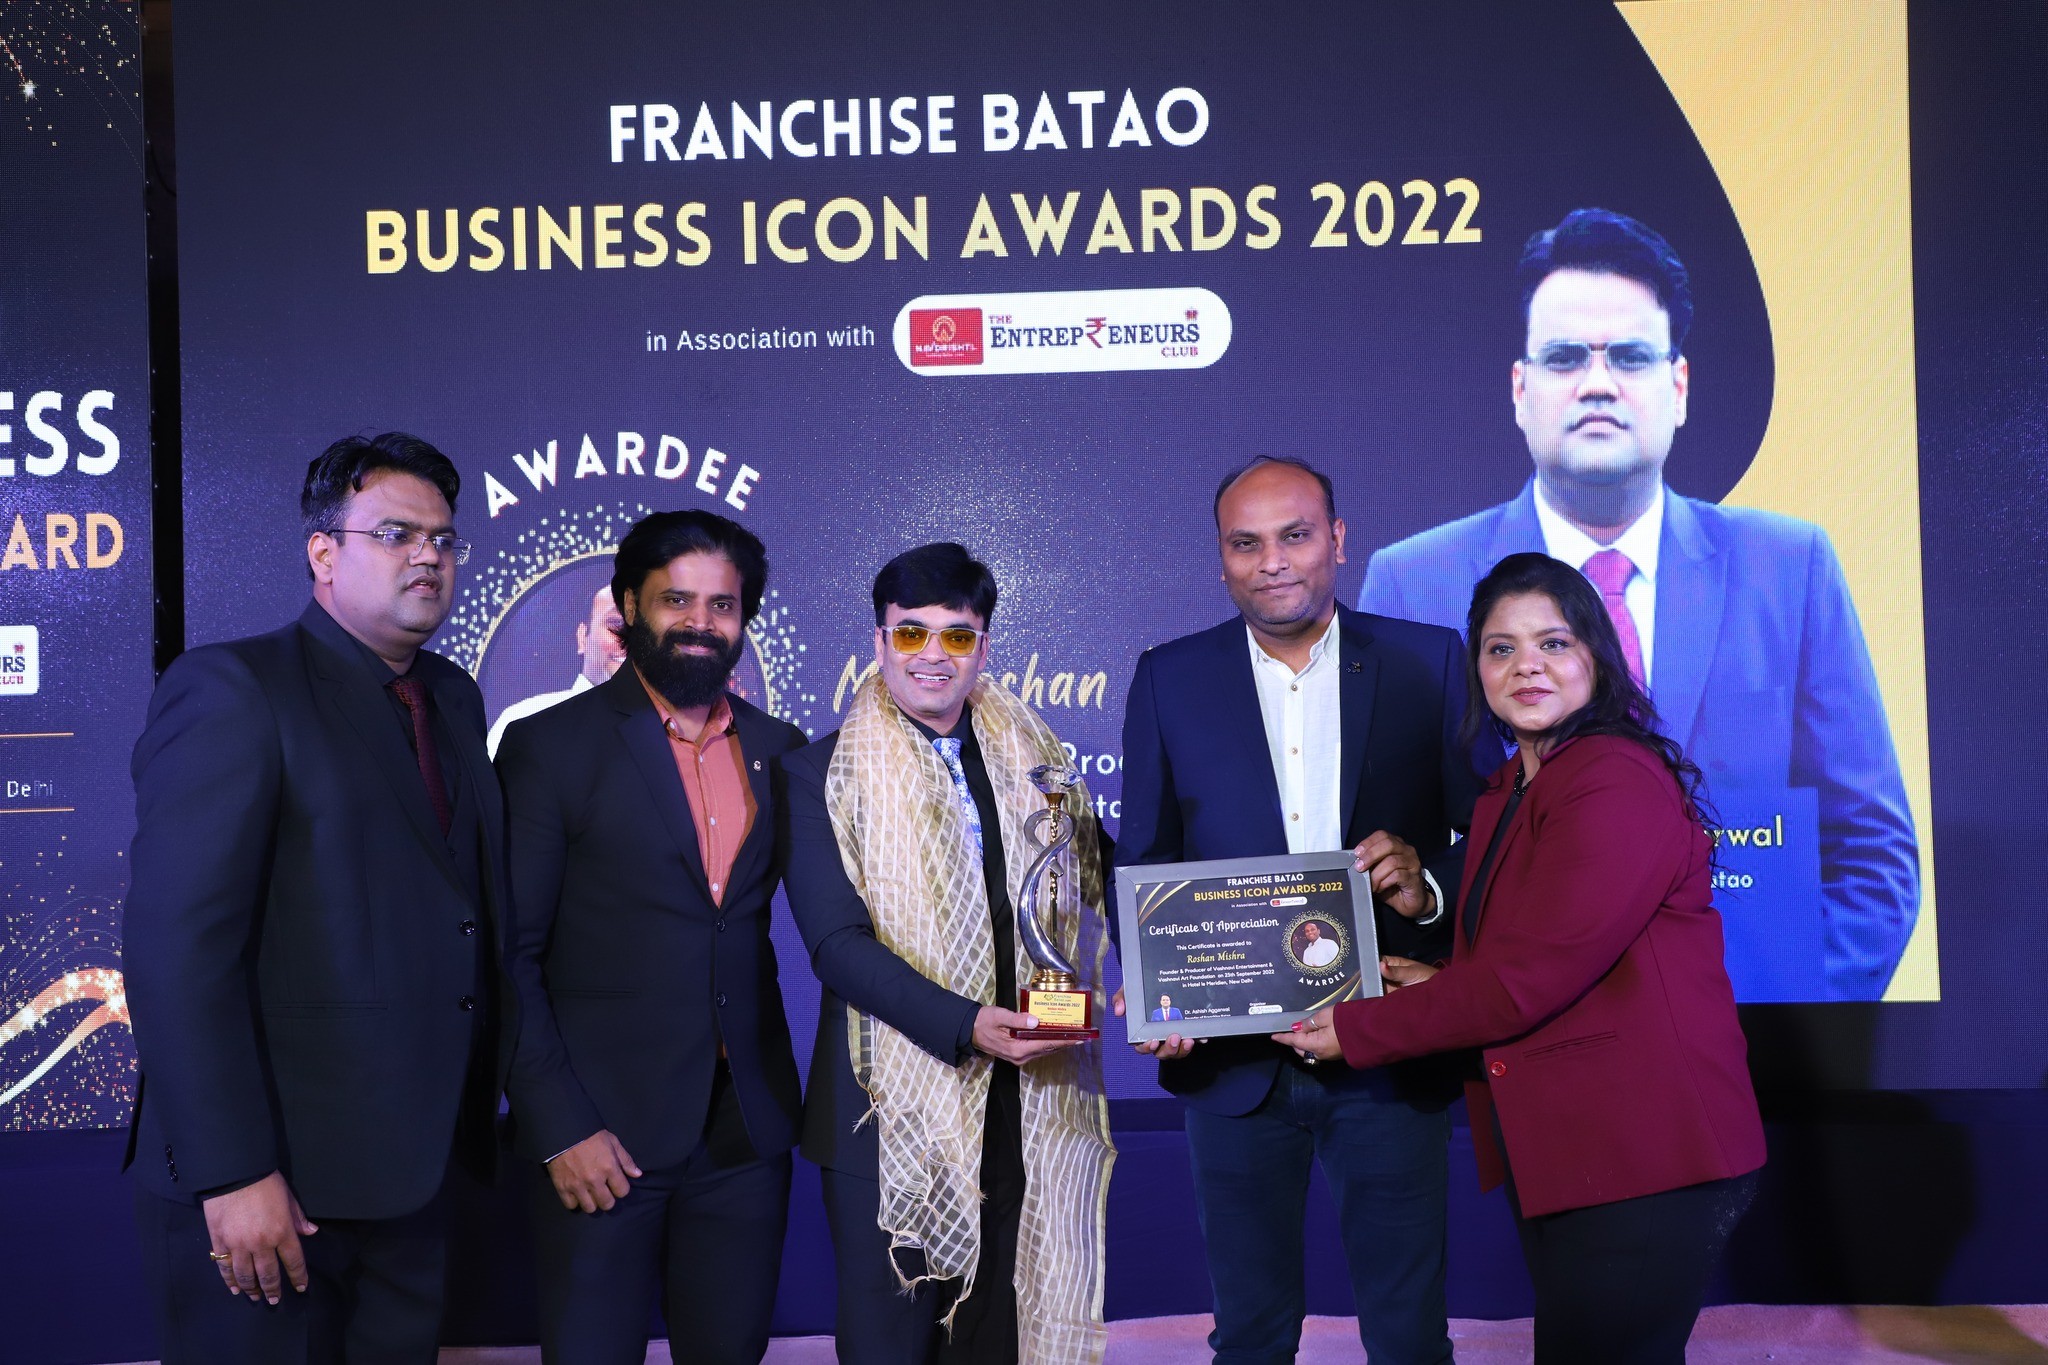 franchise batao business icon awards 2022 memories 01